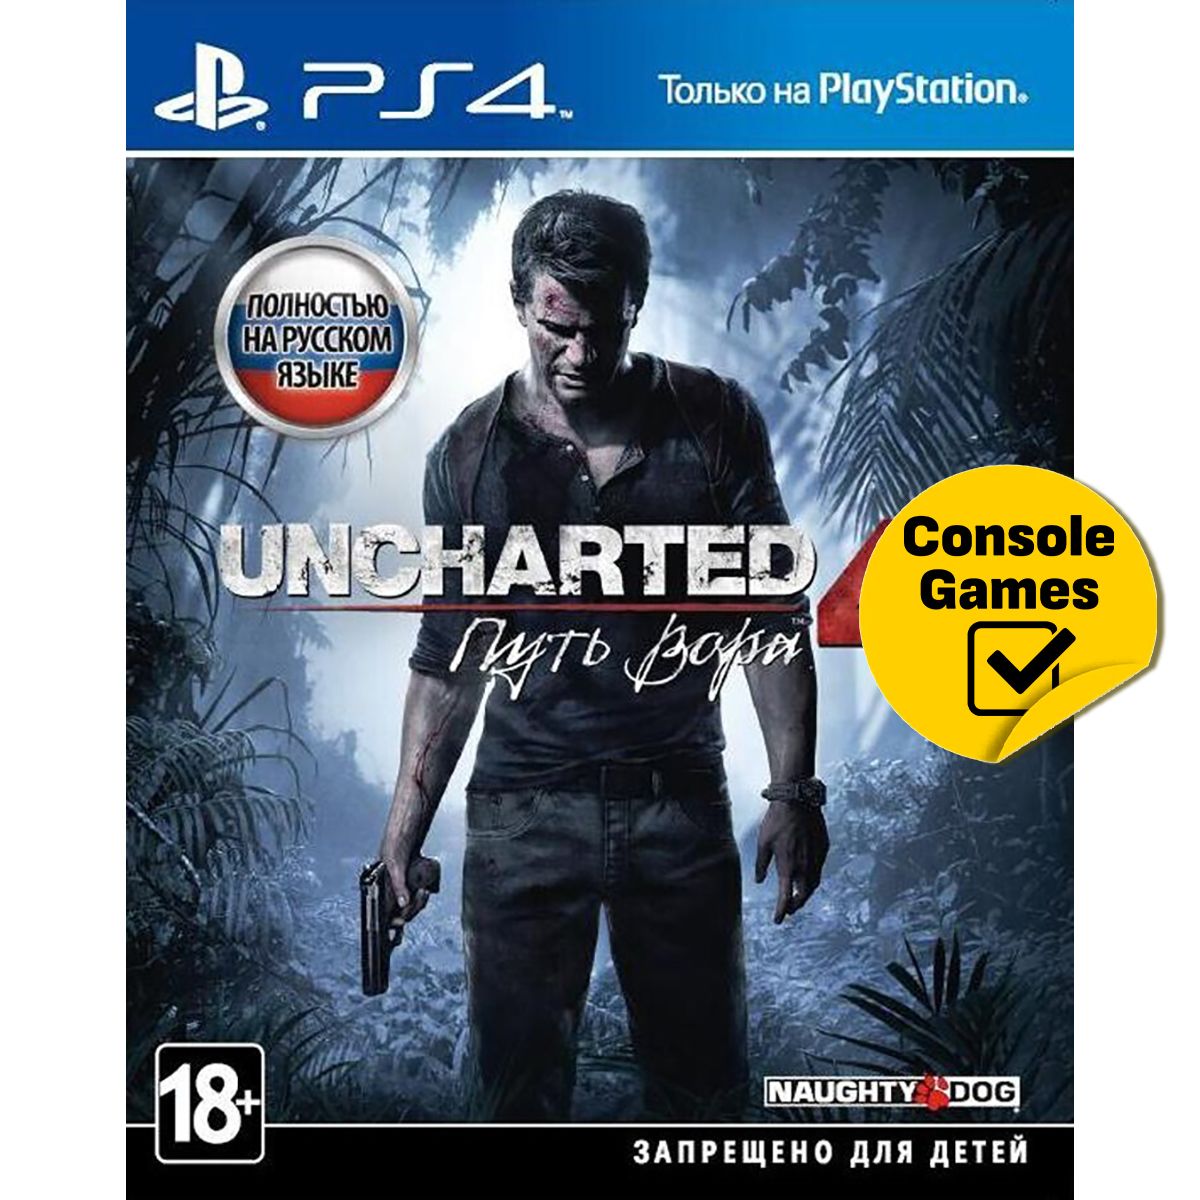 Игра Uncharted 4: A Thief’s End (Нет пленки на коробке) (PS4, полностью на русском языке)